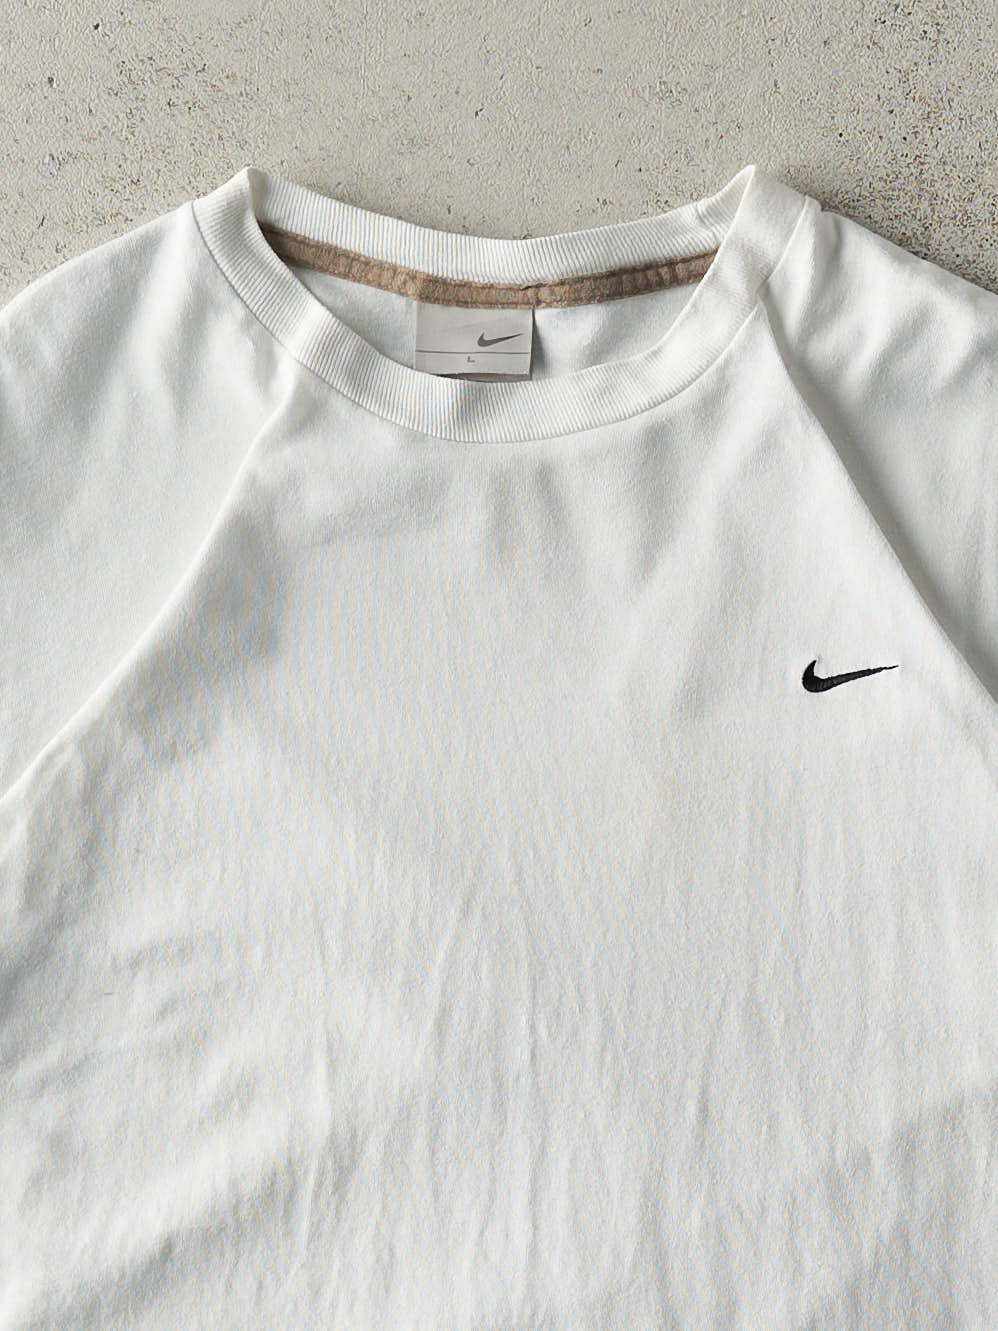 Vintage Y2K White Nike Swoosh Embroidered Tee (M)